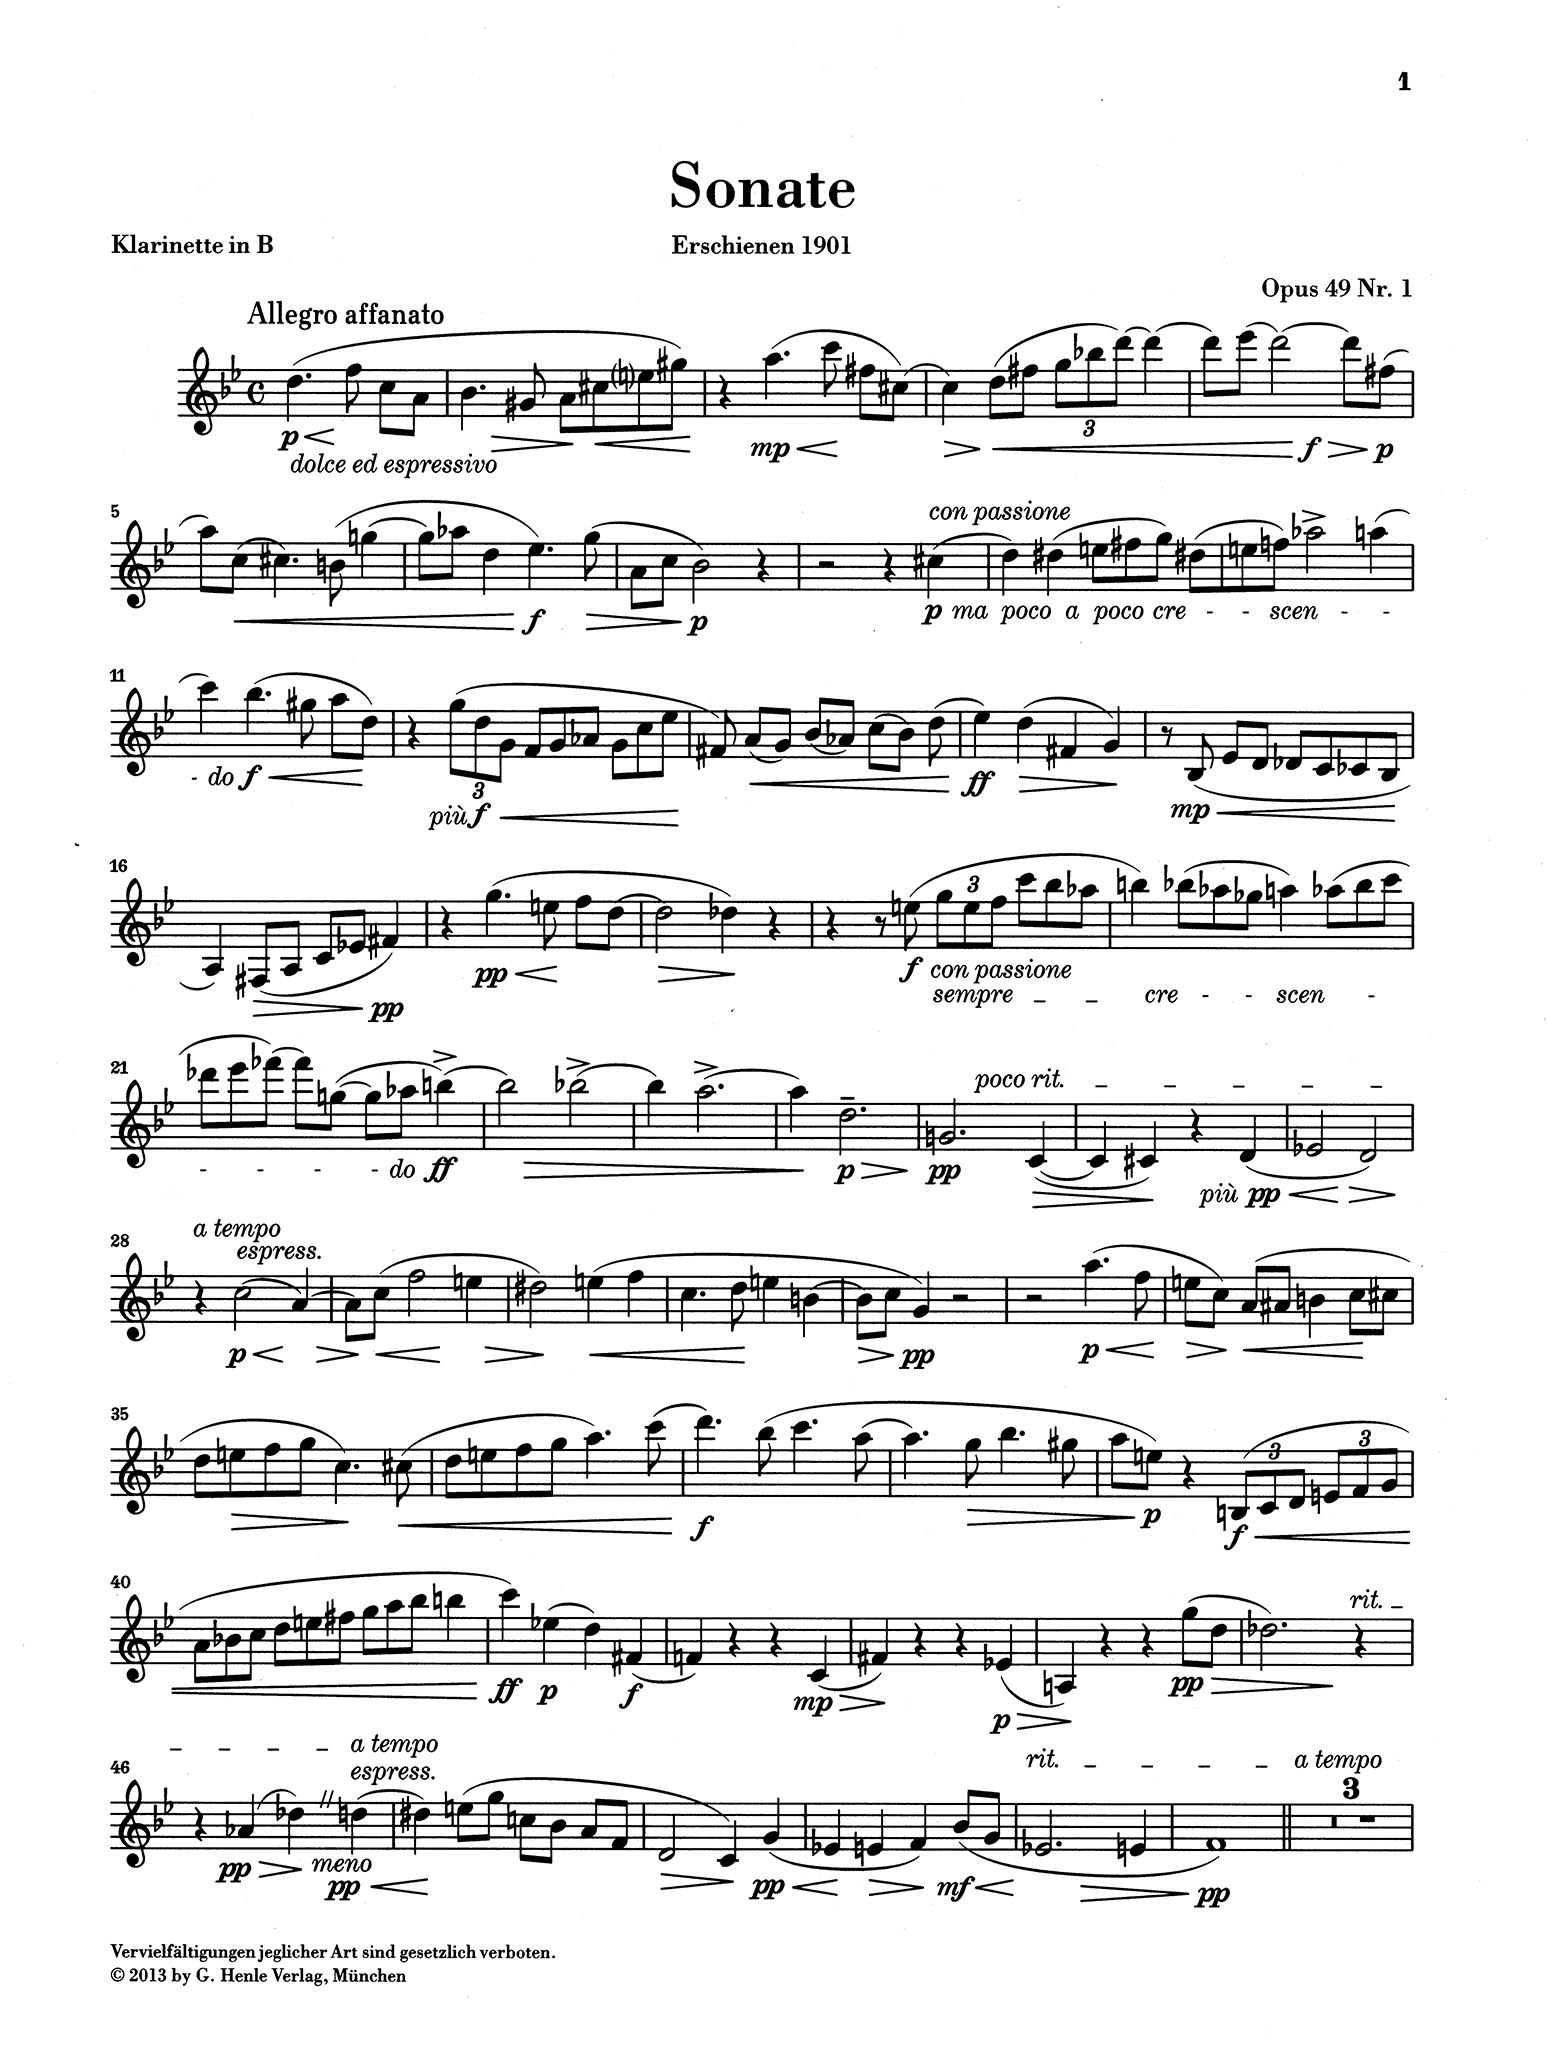 Sonata in A-flat Major, Op. 48 No. 1 Clarinet part